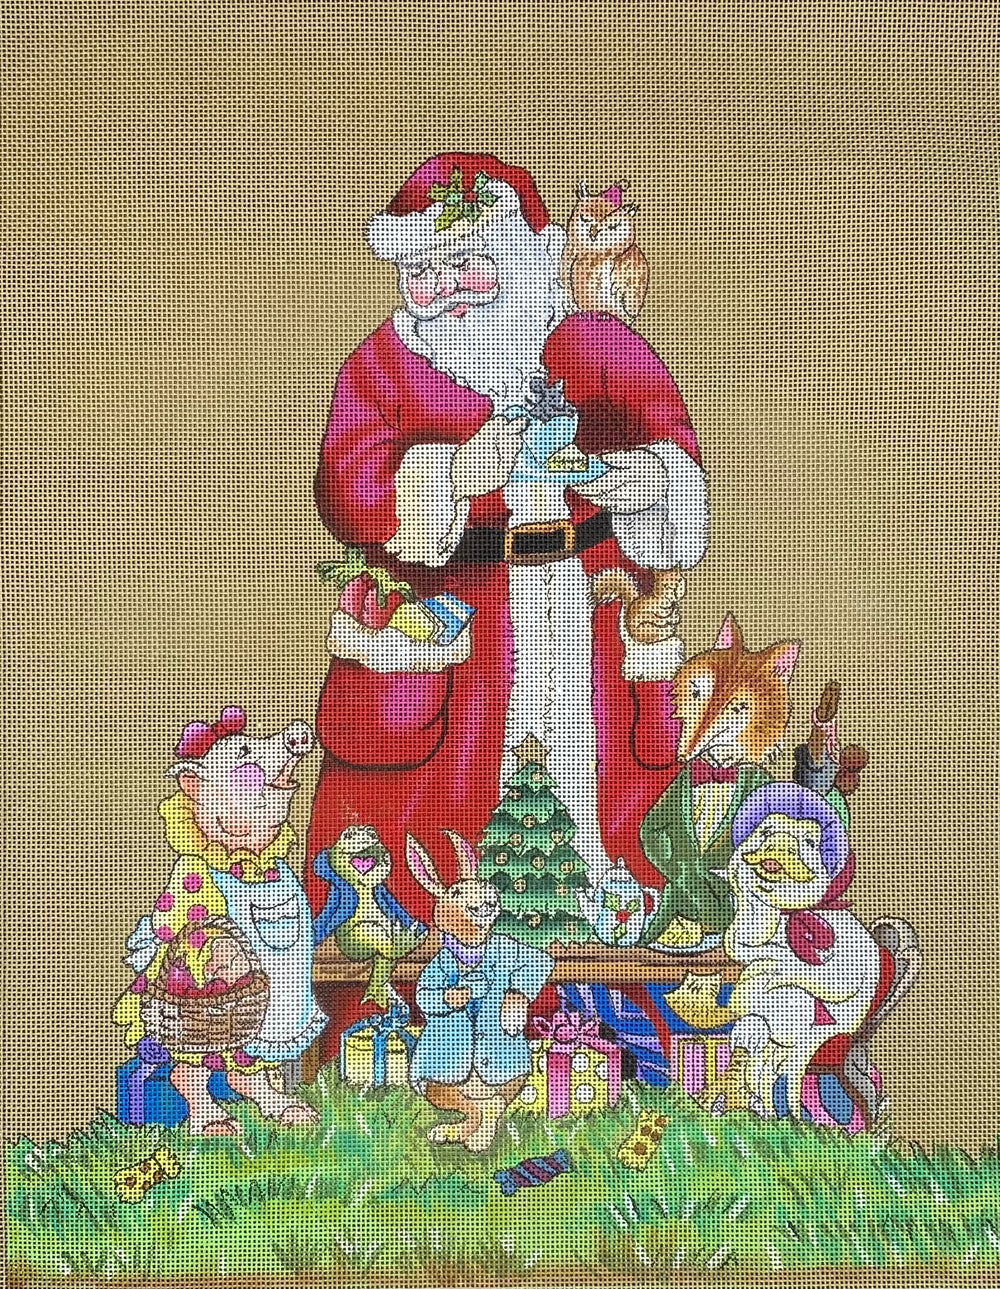 Santa's Tea Party